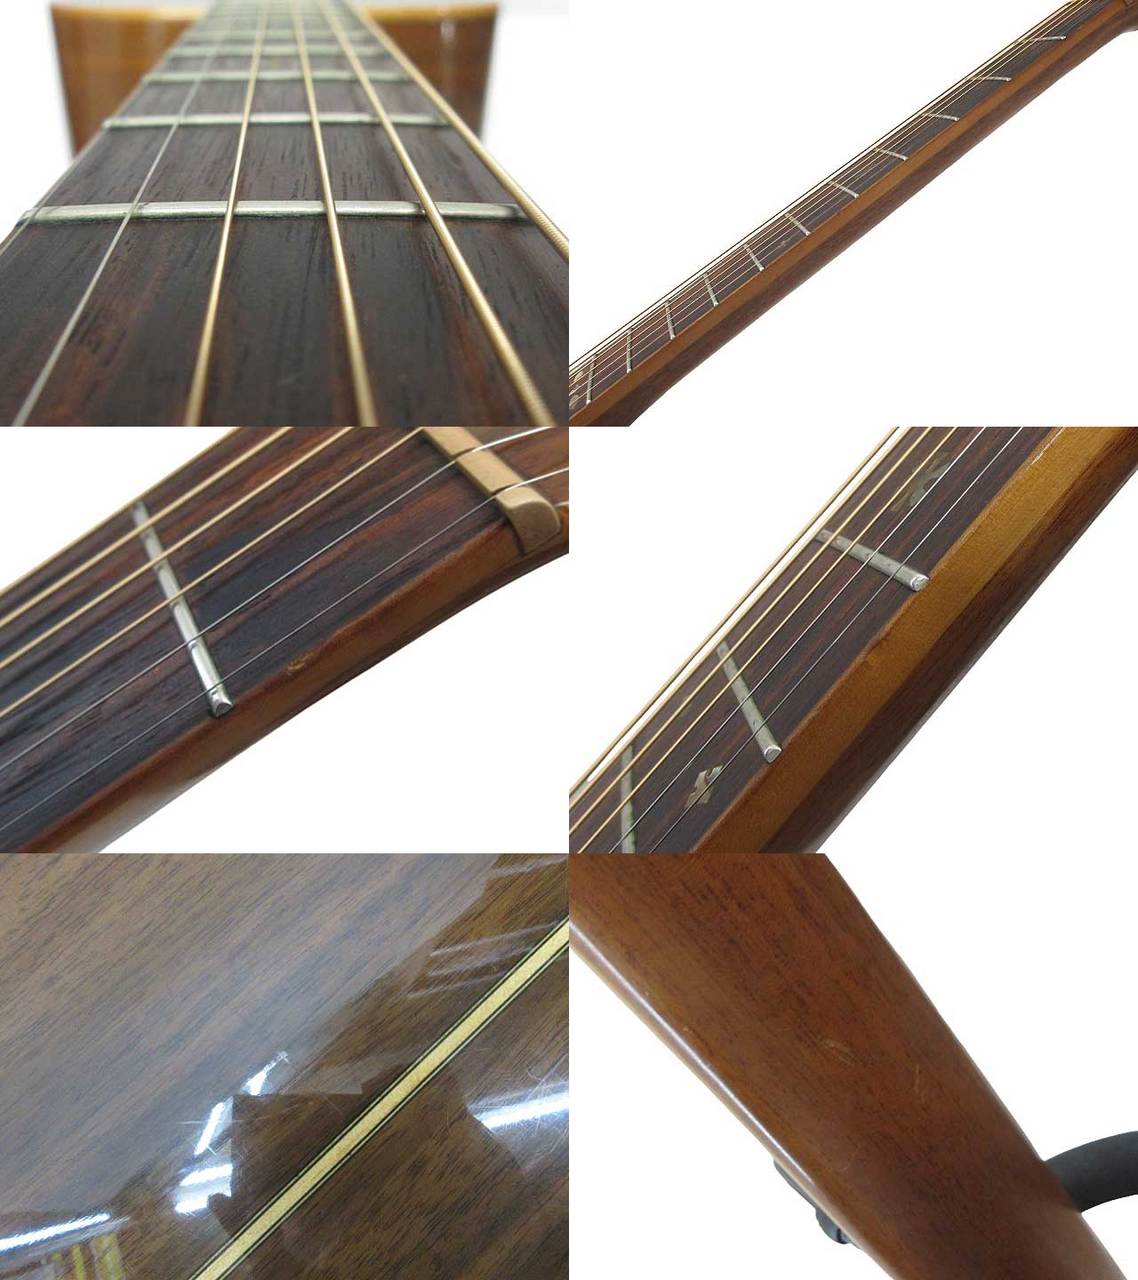 ARIA ADL-05 / SB / 2007年製 アリア アコースティックギター パーラー 